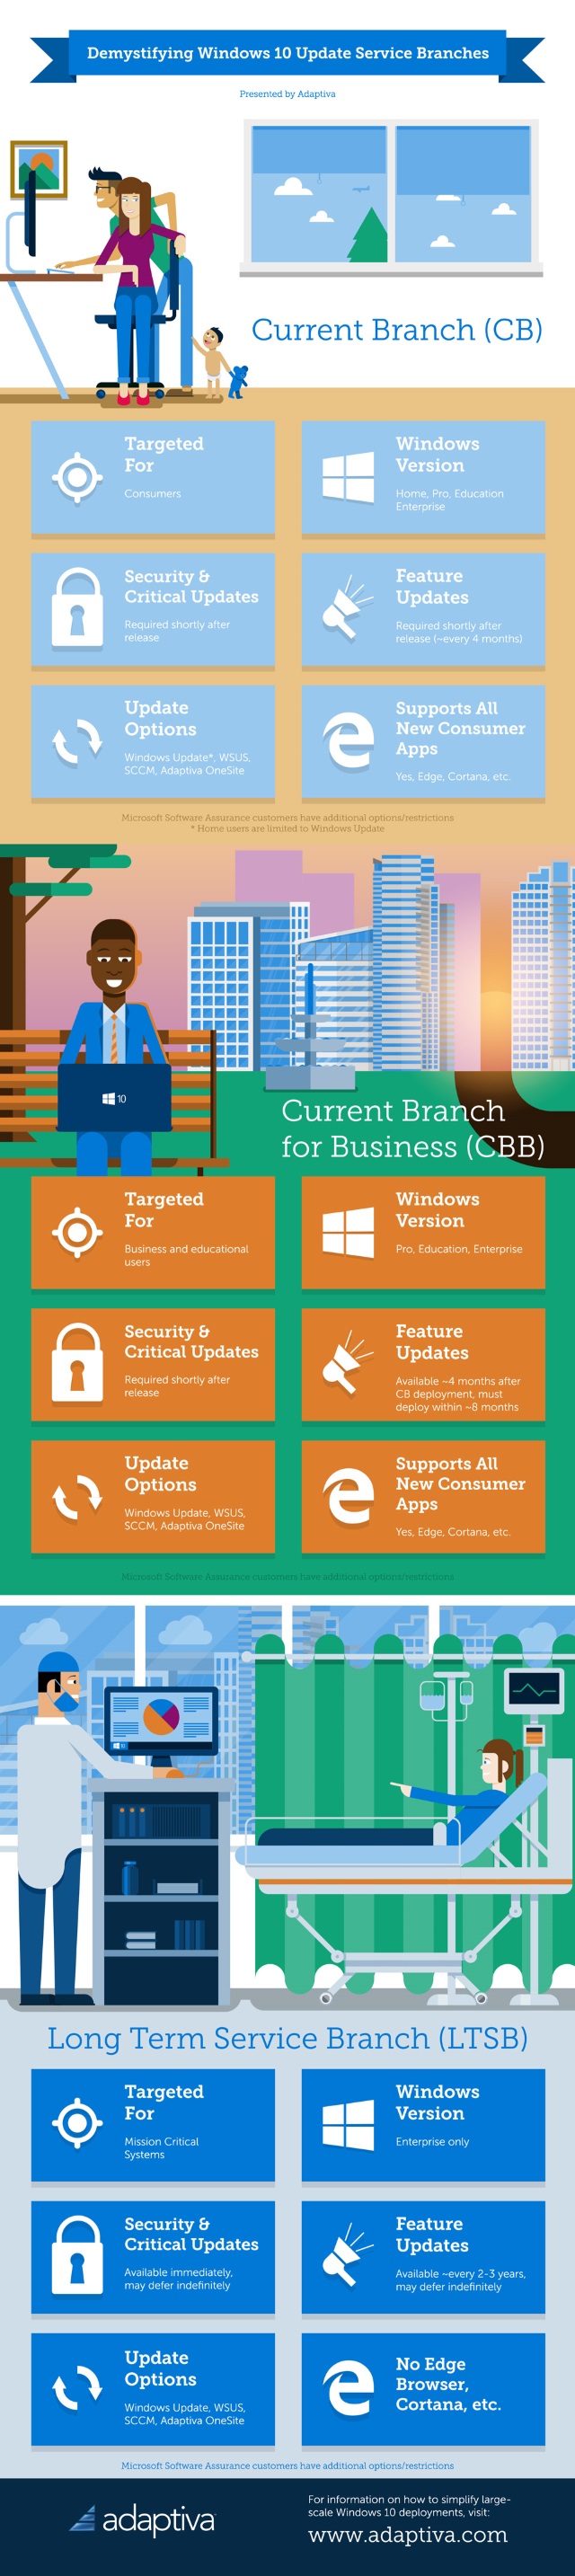 Windows-10-Update-Service-Branch-Options-Infographic1.jpg